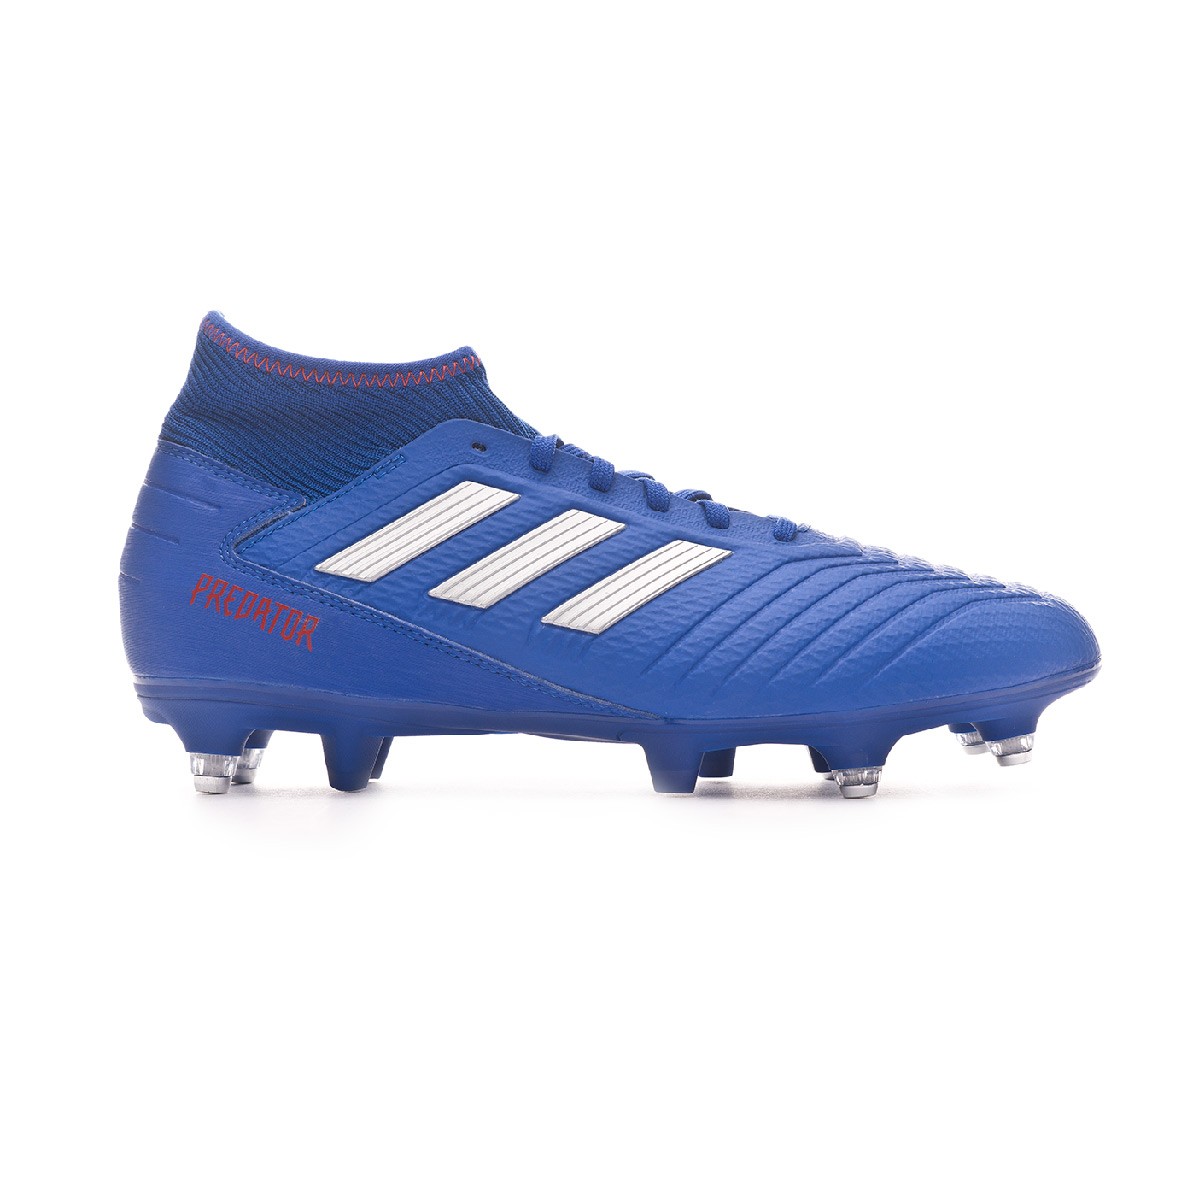 Bota de fútbol adidas Predator 19.3 SG Bold blue-Silver metallic-Active red  - Tienda de fútbol Fútbol Emotion